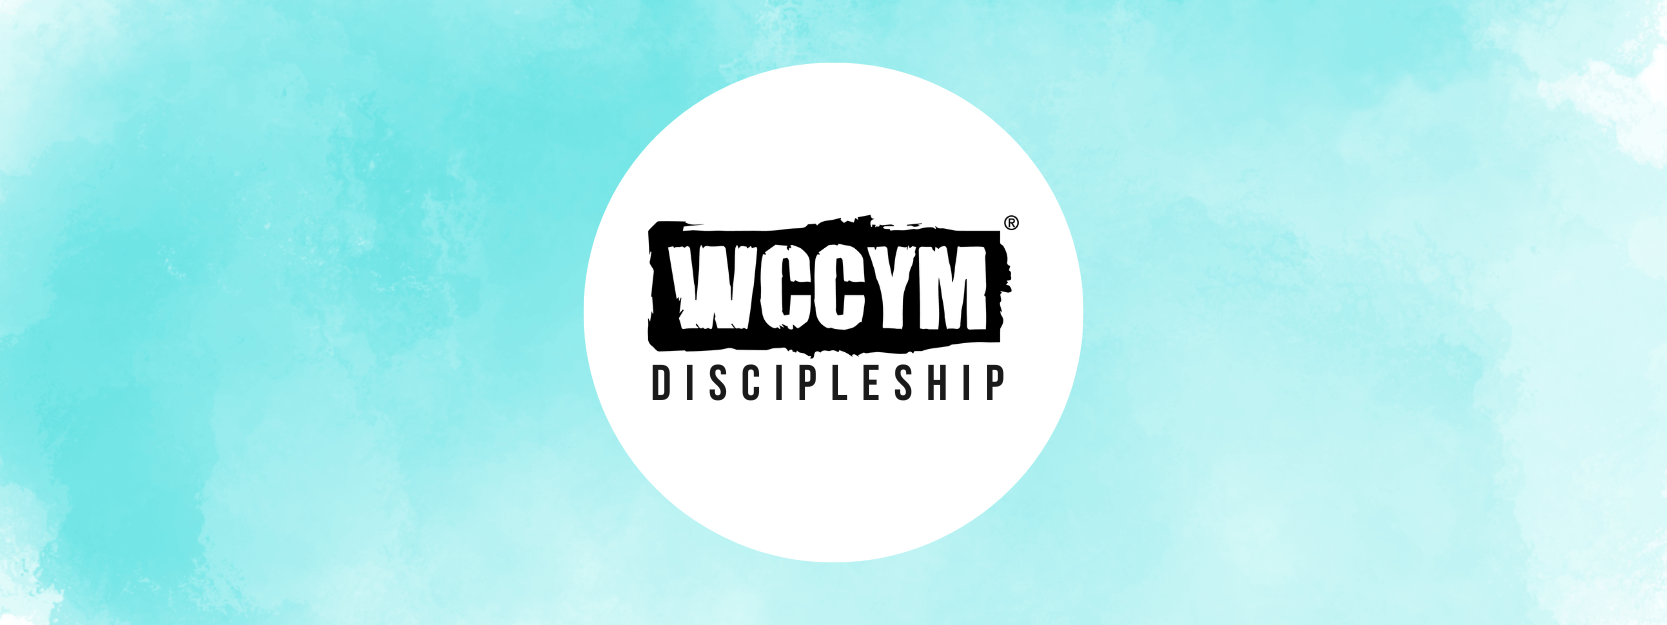 Copy of WCCYM Discipleship - IG